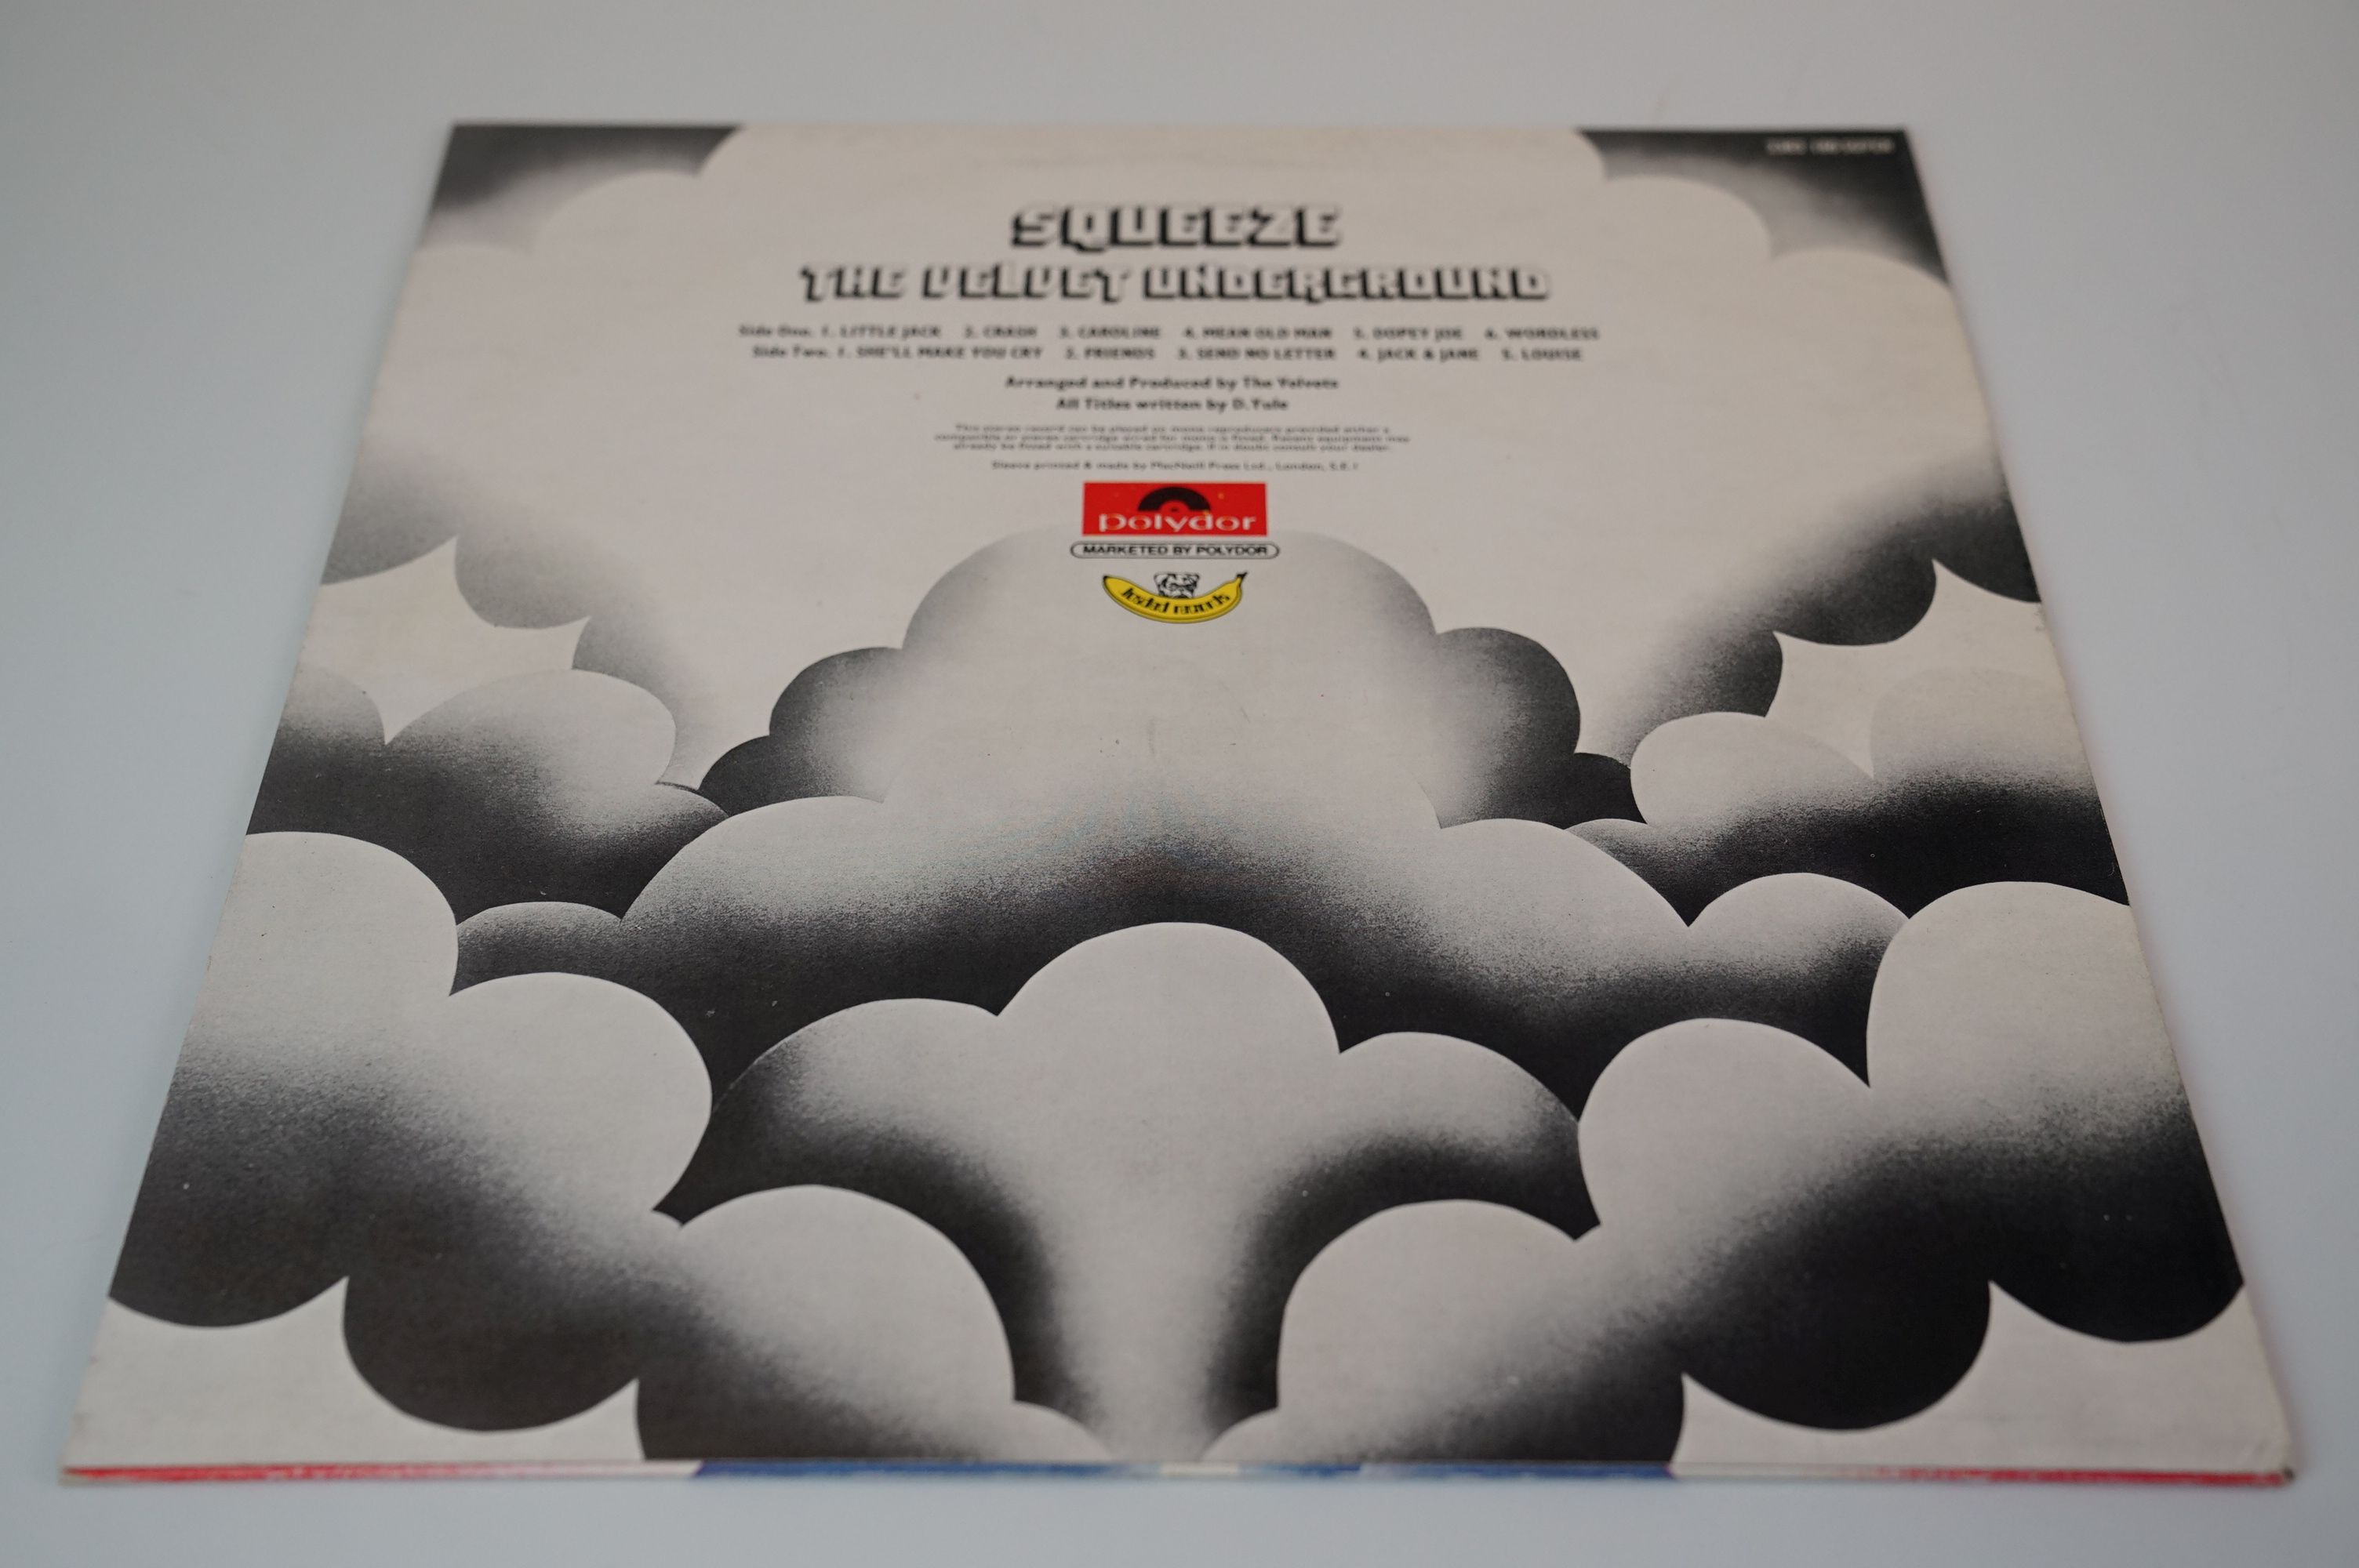 Vinyl - Four Velvet Underground LPs to include White Light/White Heat MGM 2353024, Loaded ( - Image 27 of 31